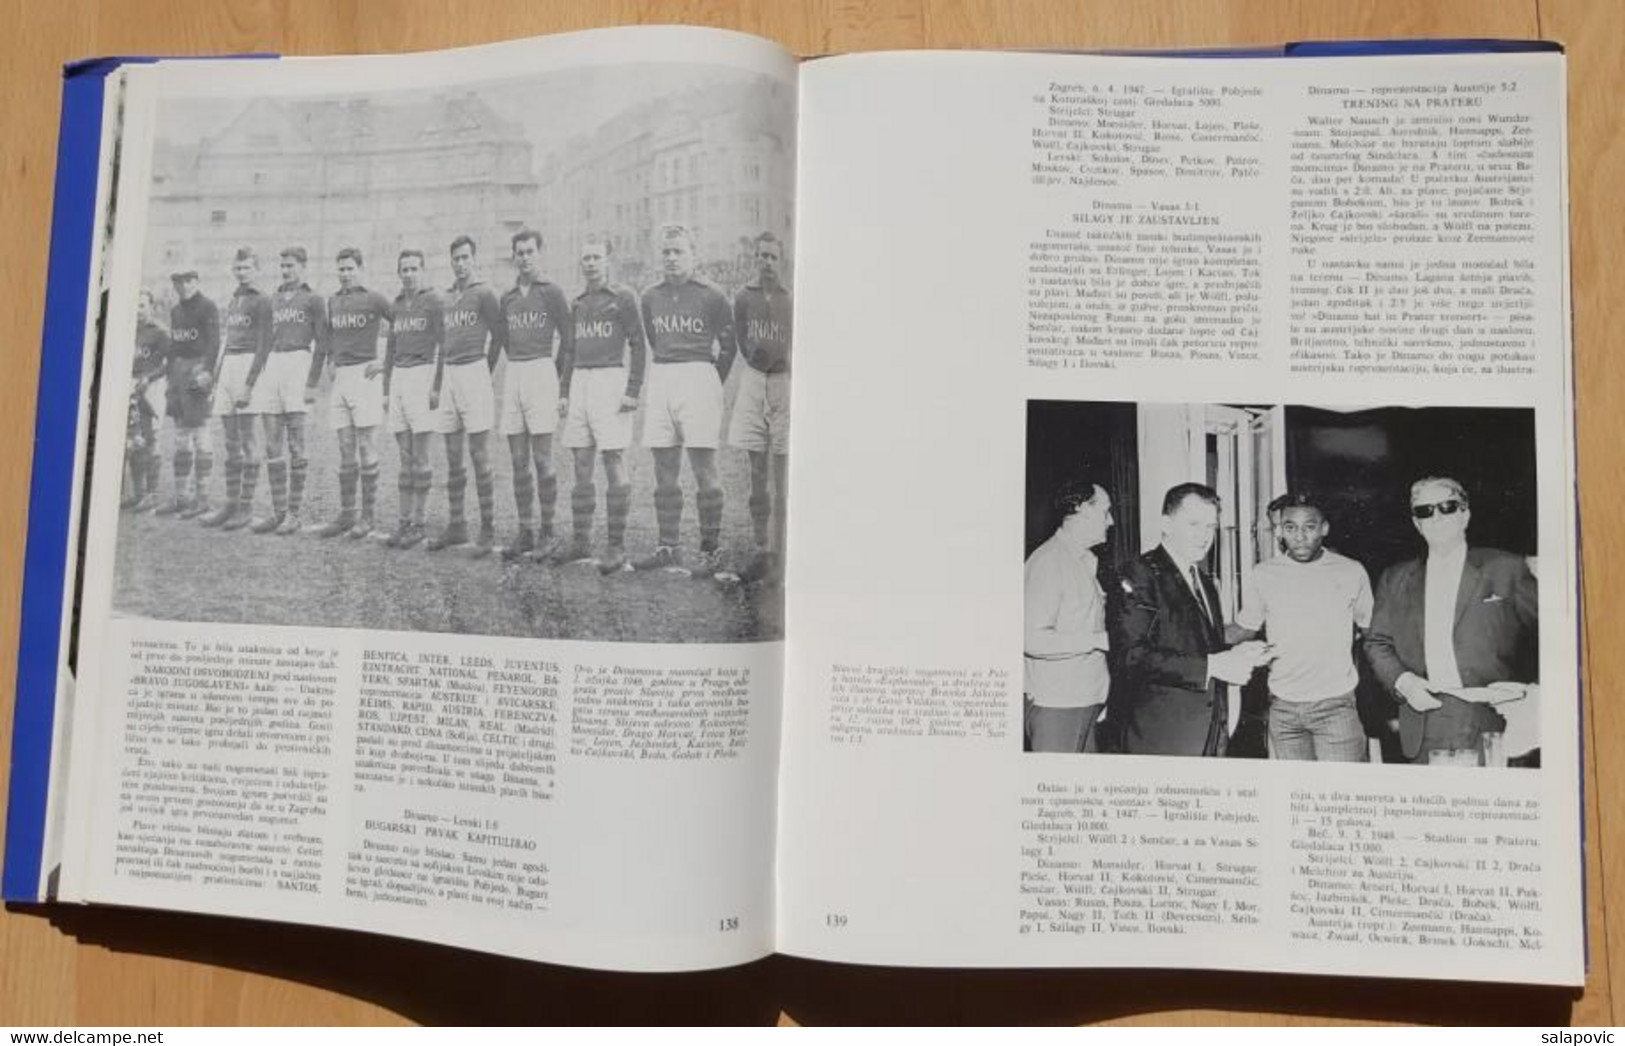 DINAMO ZAGREB 1945-1975 Fredi Kramera, Roman Garber, Zvonimir Magdić monografija football club Croatia, monograph